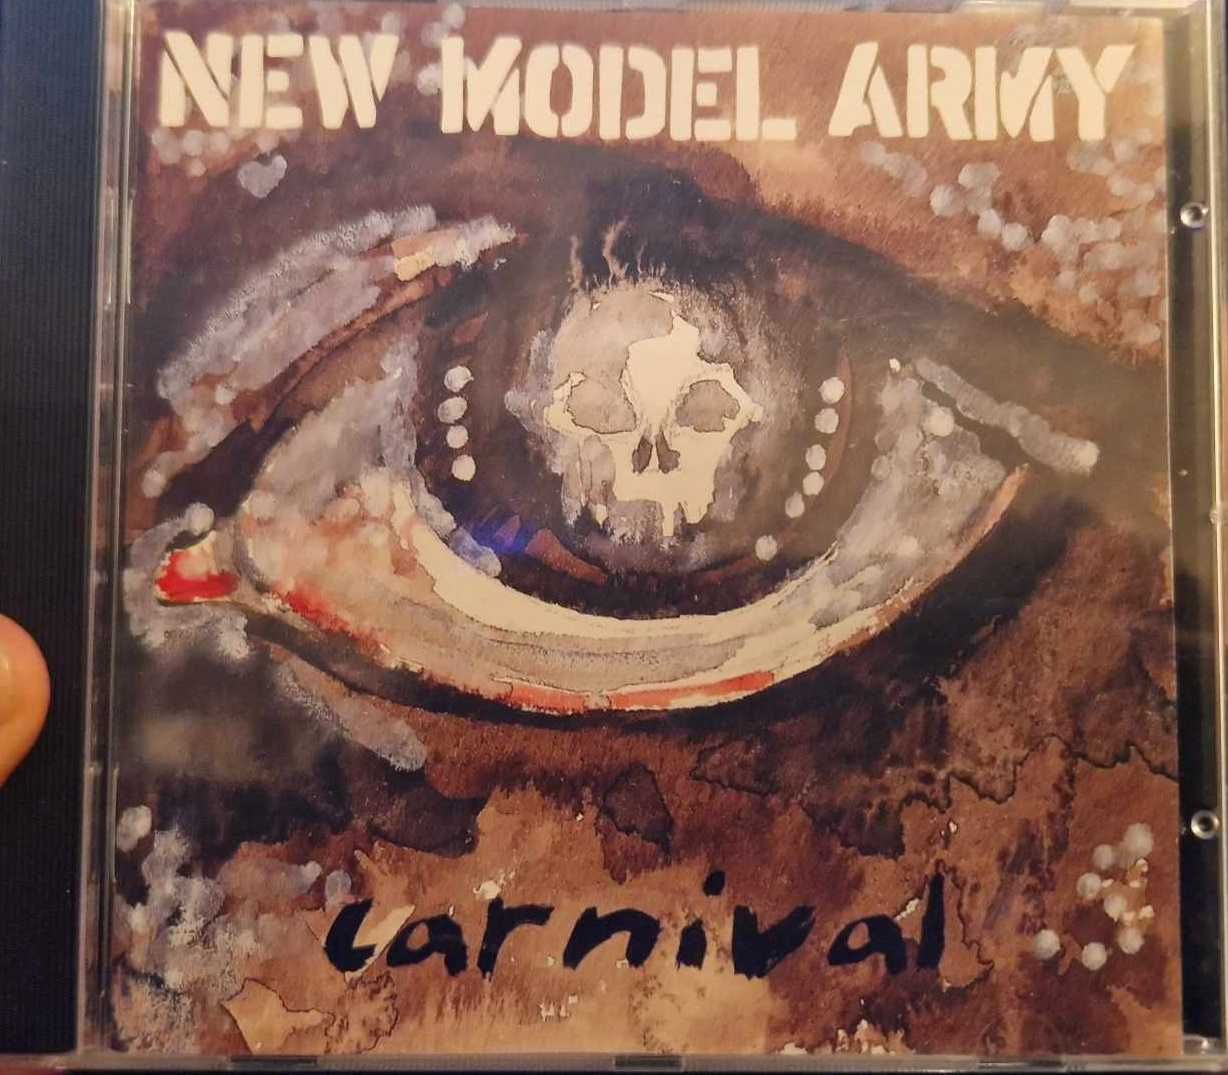 new model army carnival CD